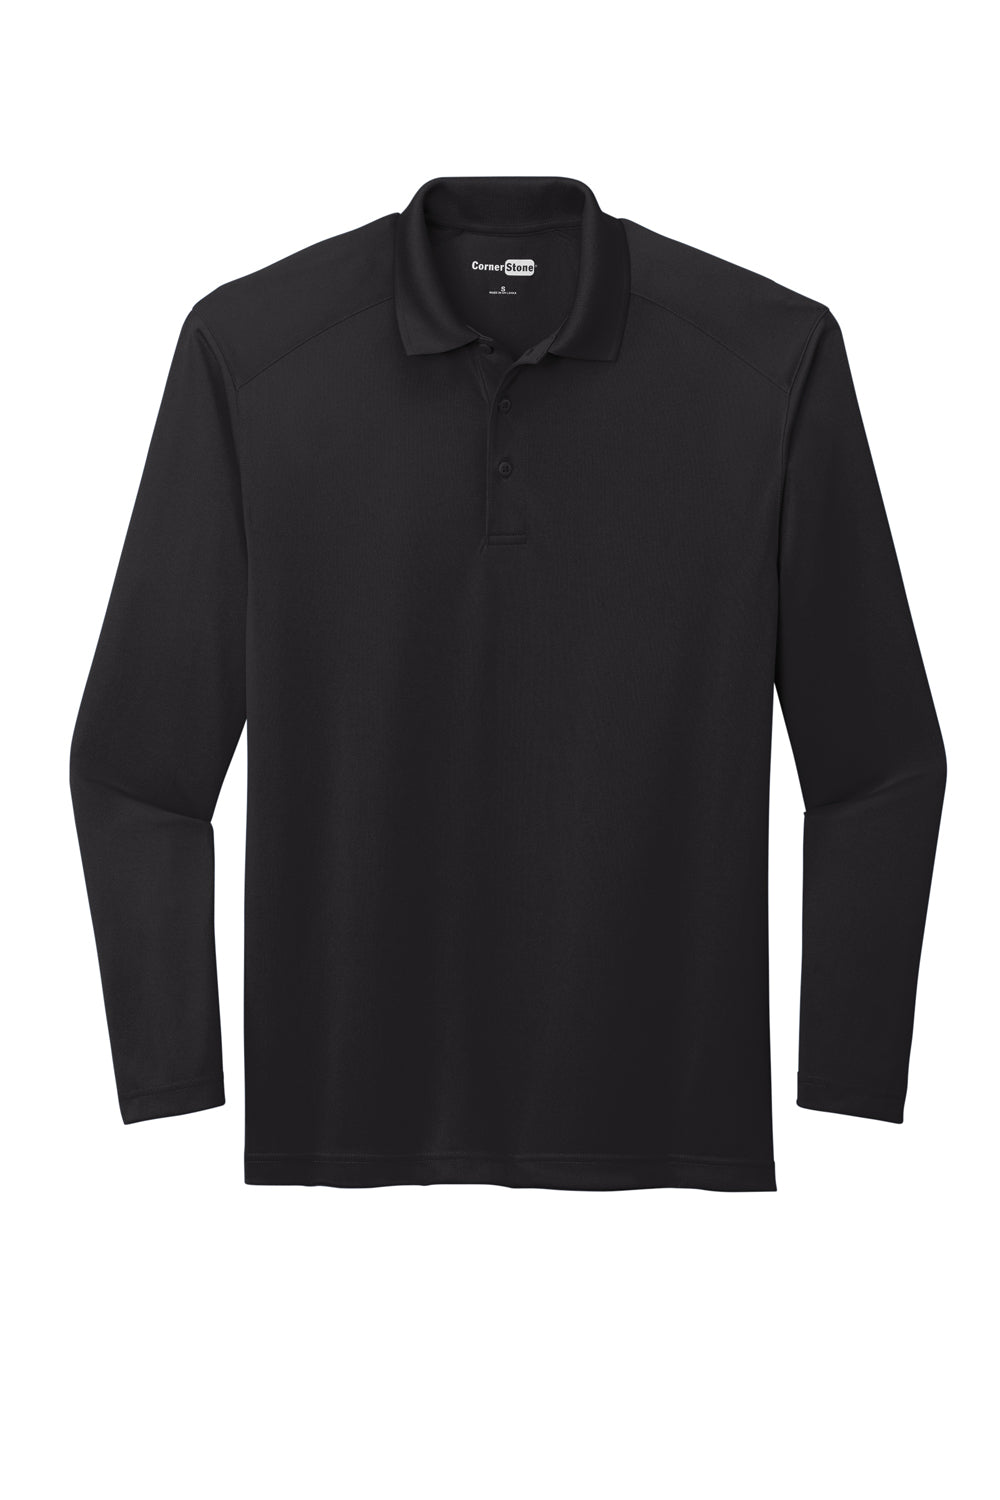 CornerStone CS418LS Select Long Sleeve Polo Shirt Black Flat Front